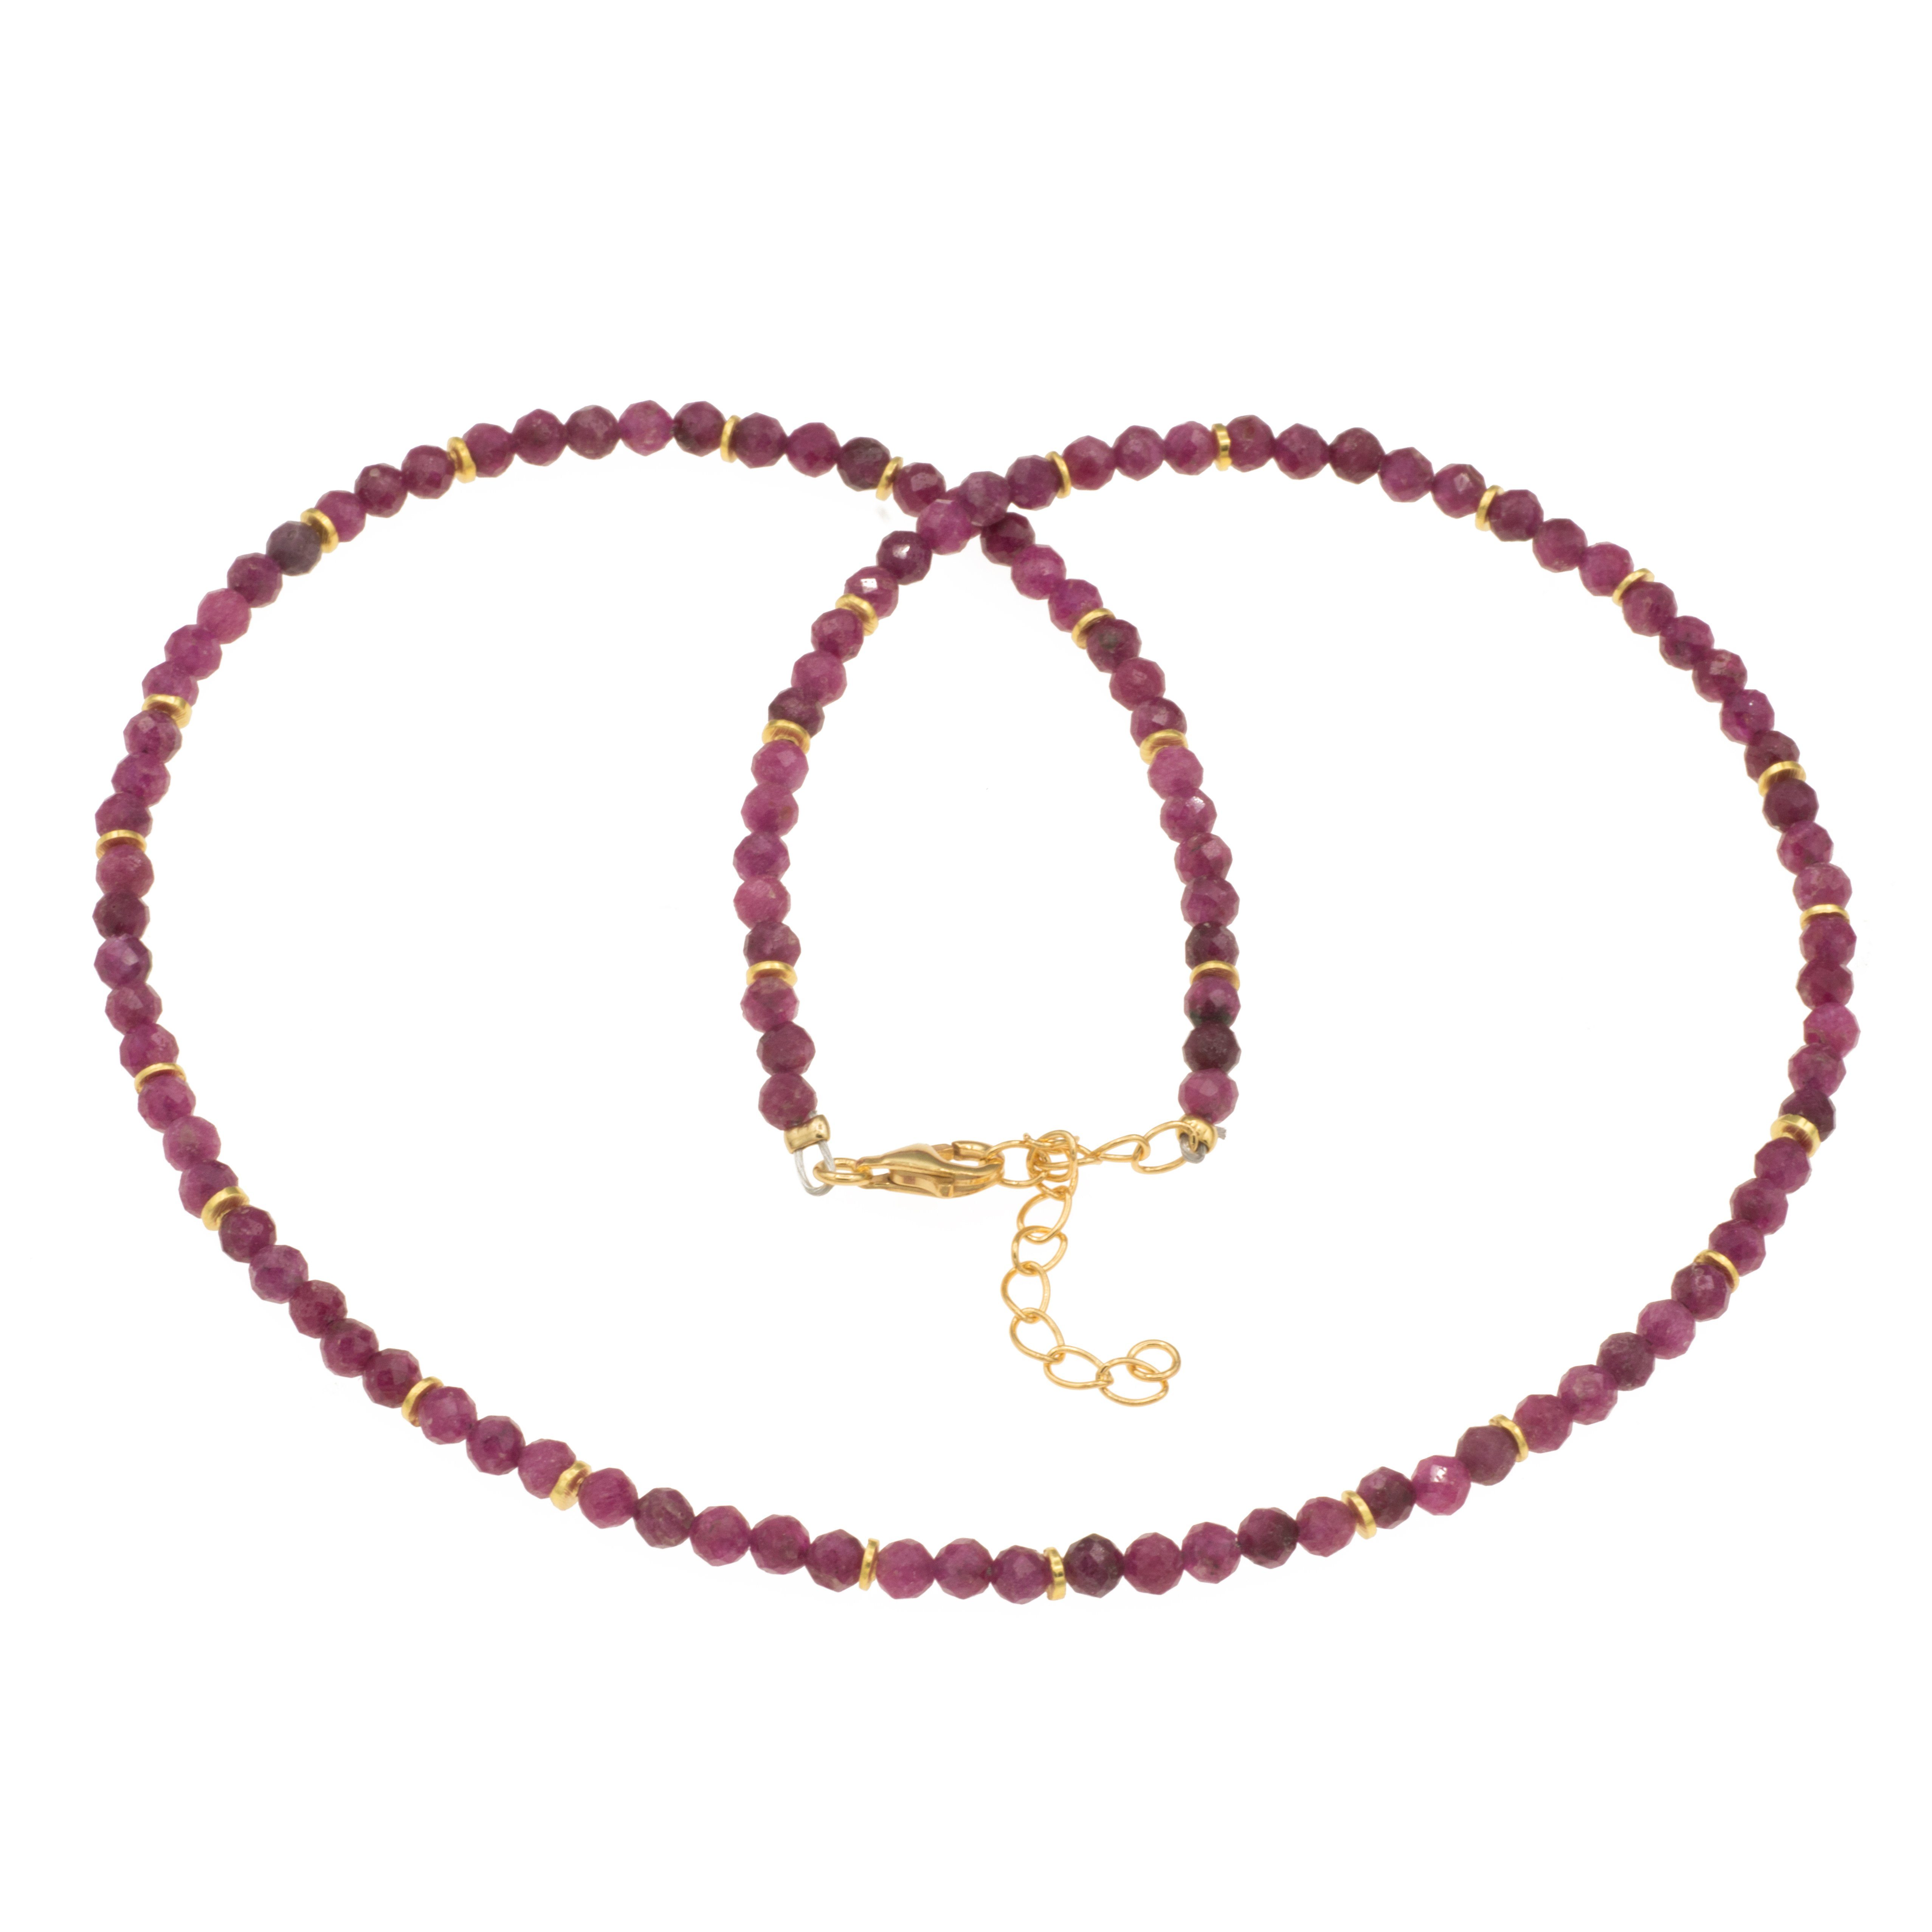 Bella Carina Perlenkette Kette mit Rubin Perlen facettiert und vergoldeten Silberverzierungen, mit facettierten Rubin Perlen